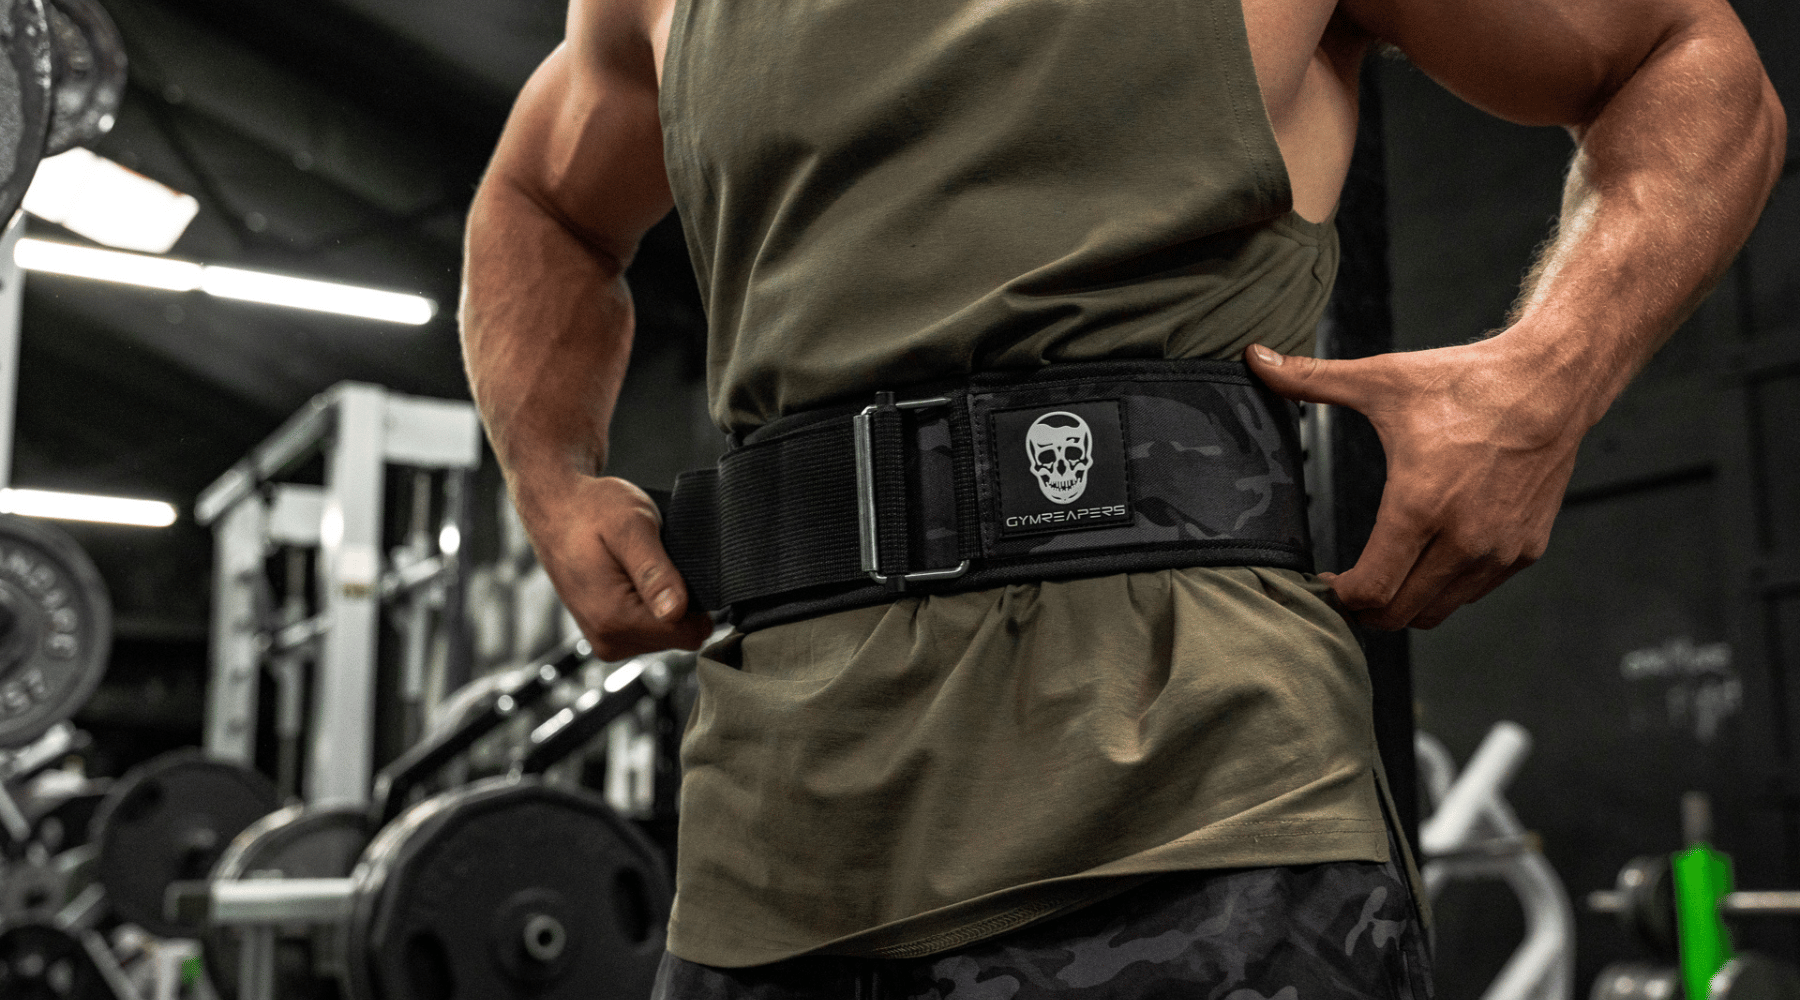 weight lifting belt - Men's accessories